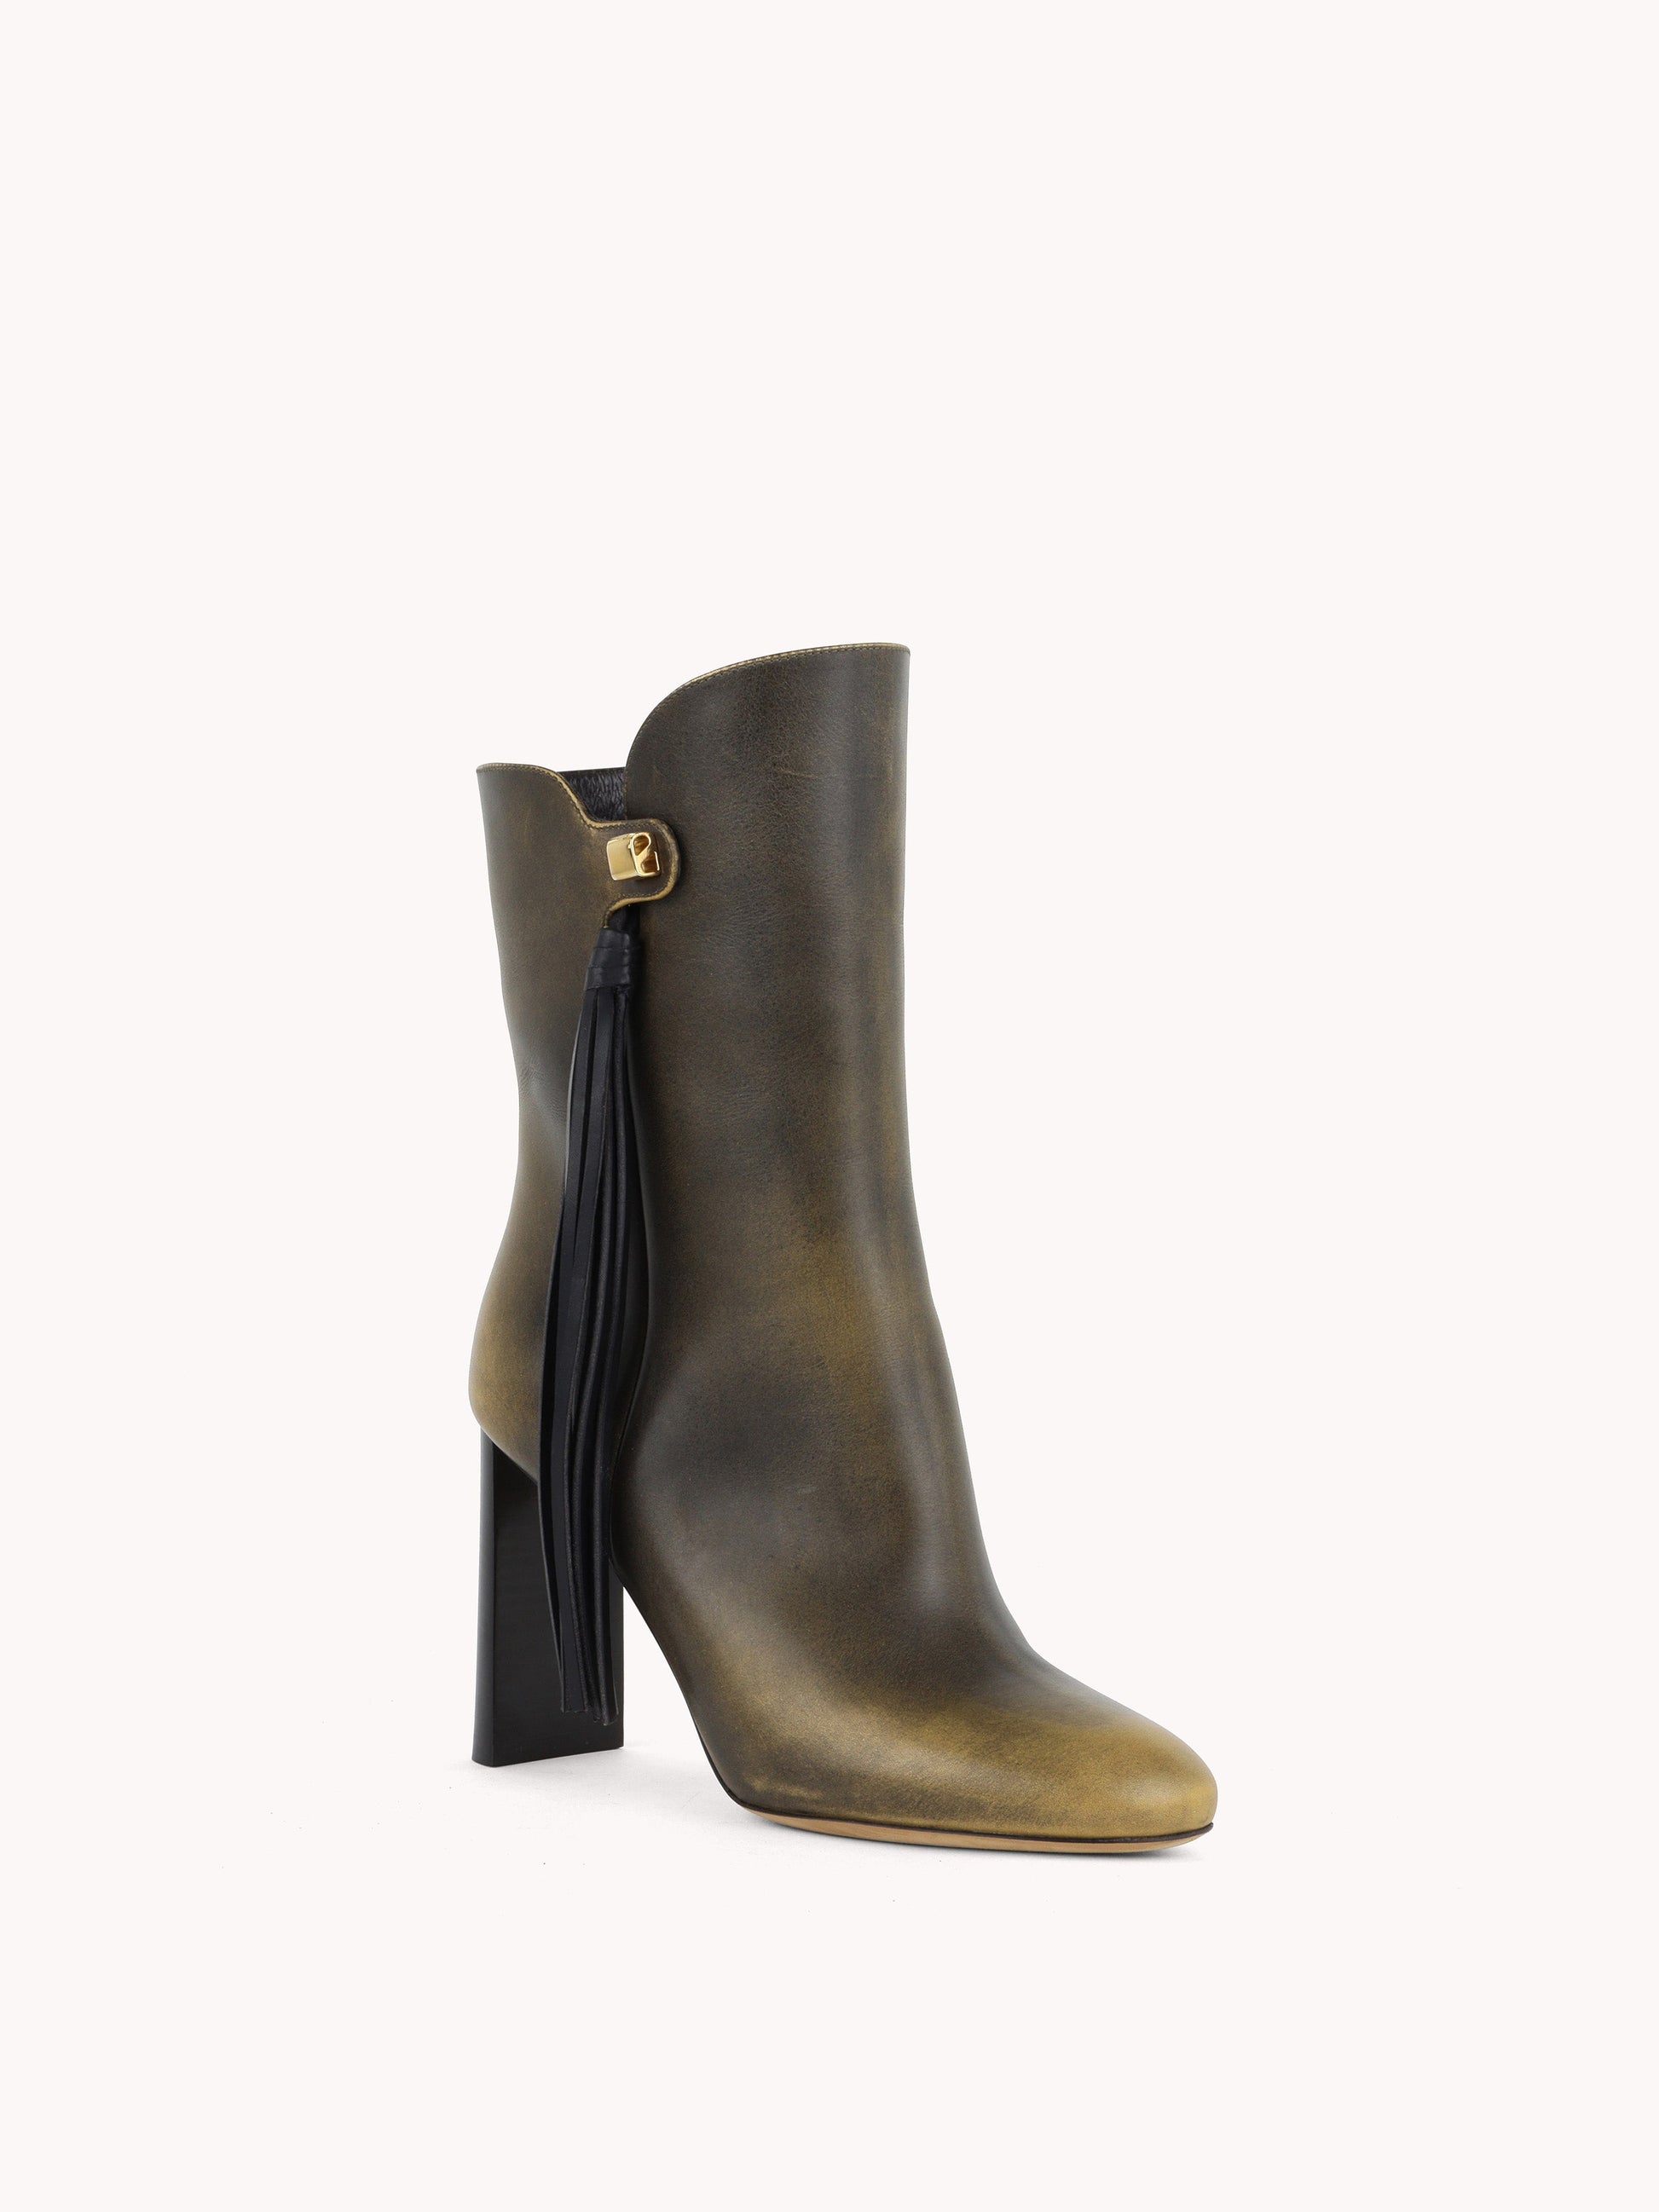 designer golden brown leather ankle boots high-heel skorpios